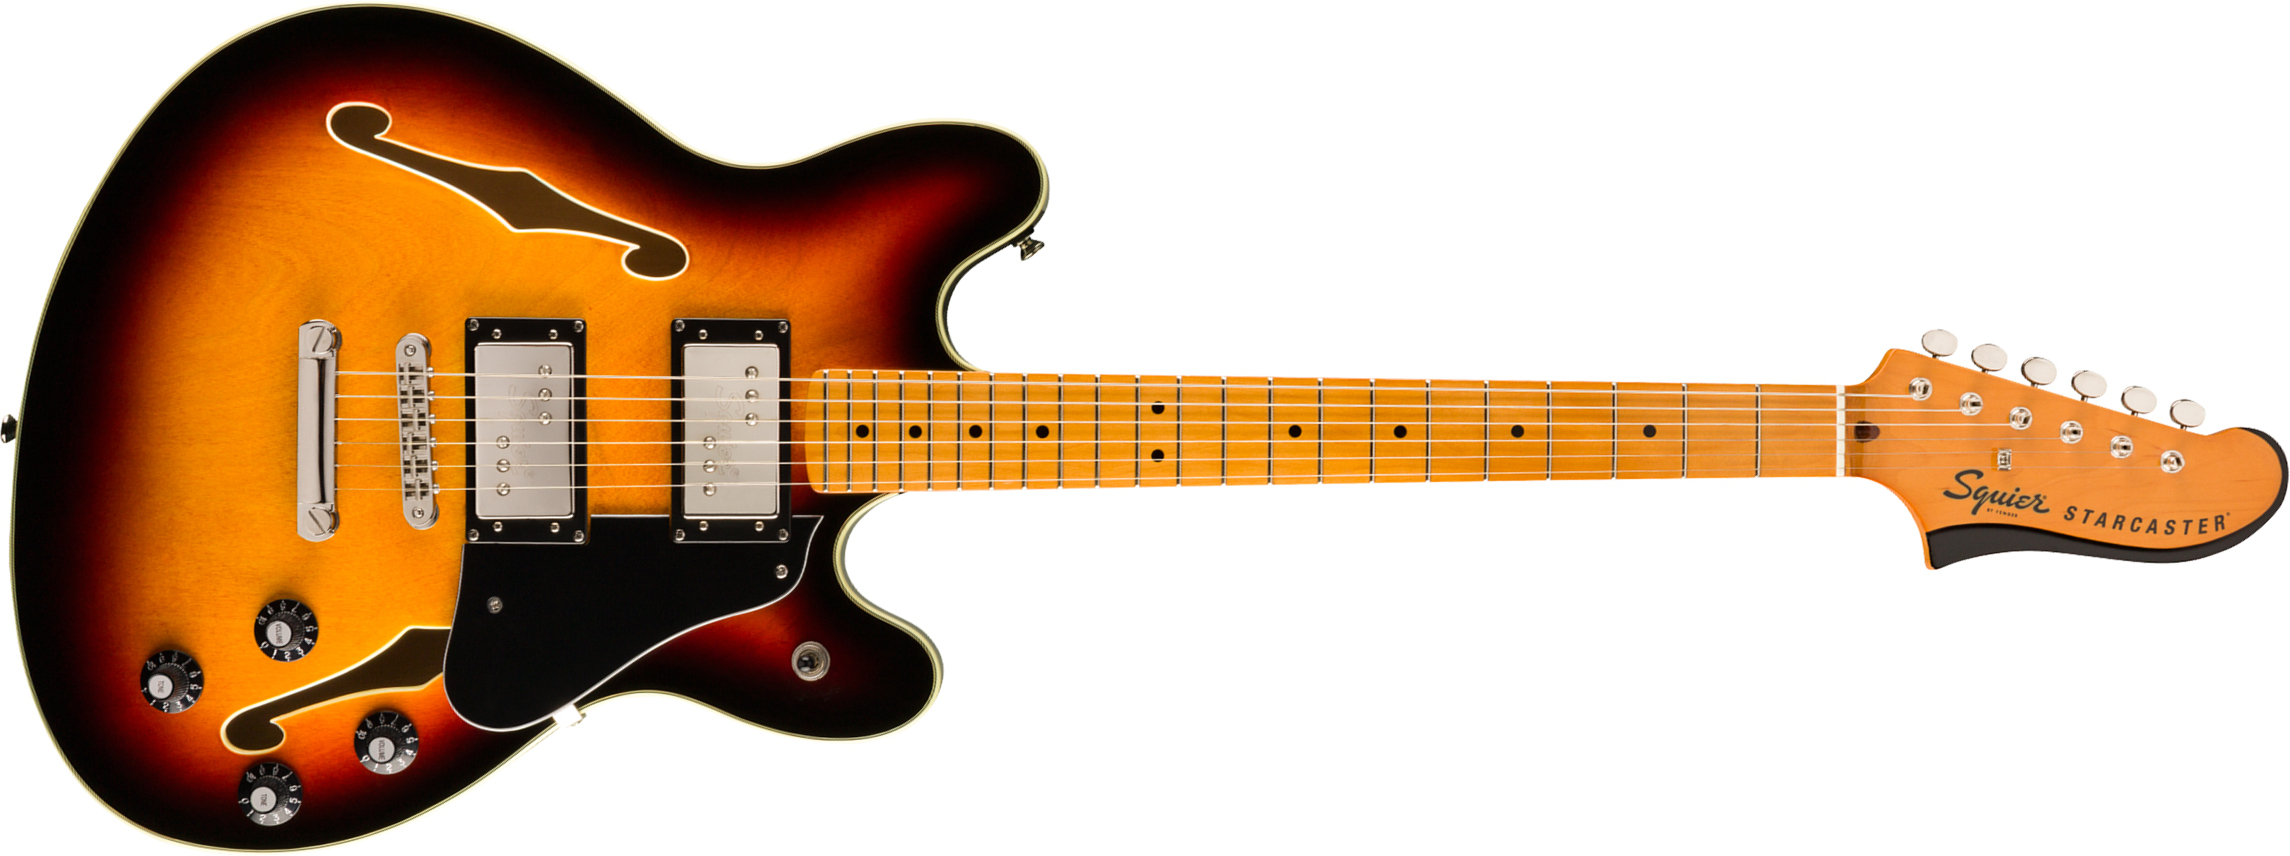 Squier Starcaster Classic Vibe 2019 Hh Ht Mn - 3-color Sunburst - Semi hollow elektriche gitaar - Main picture